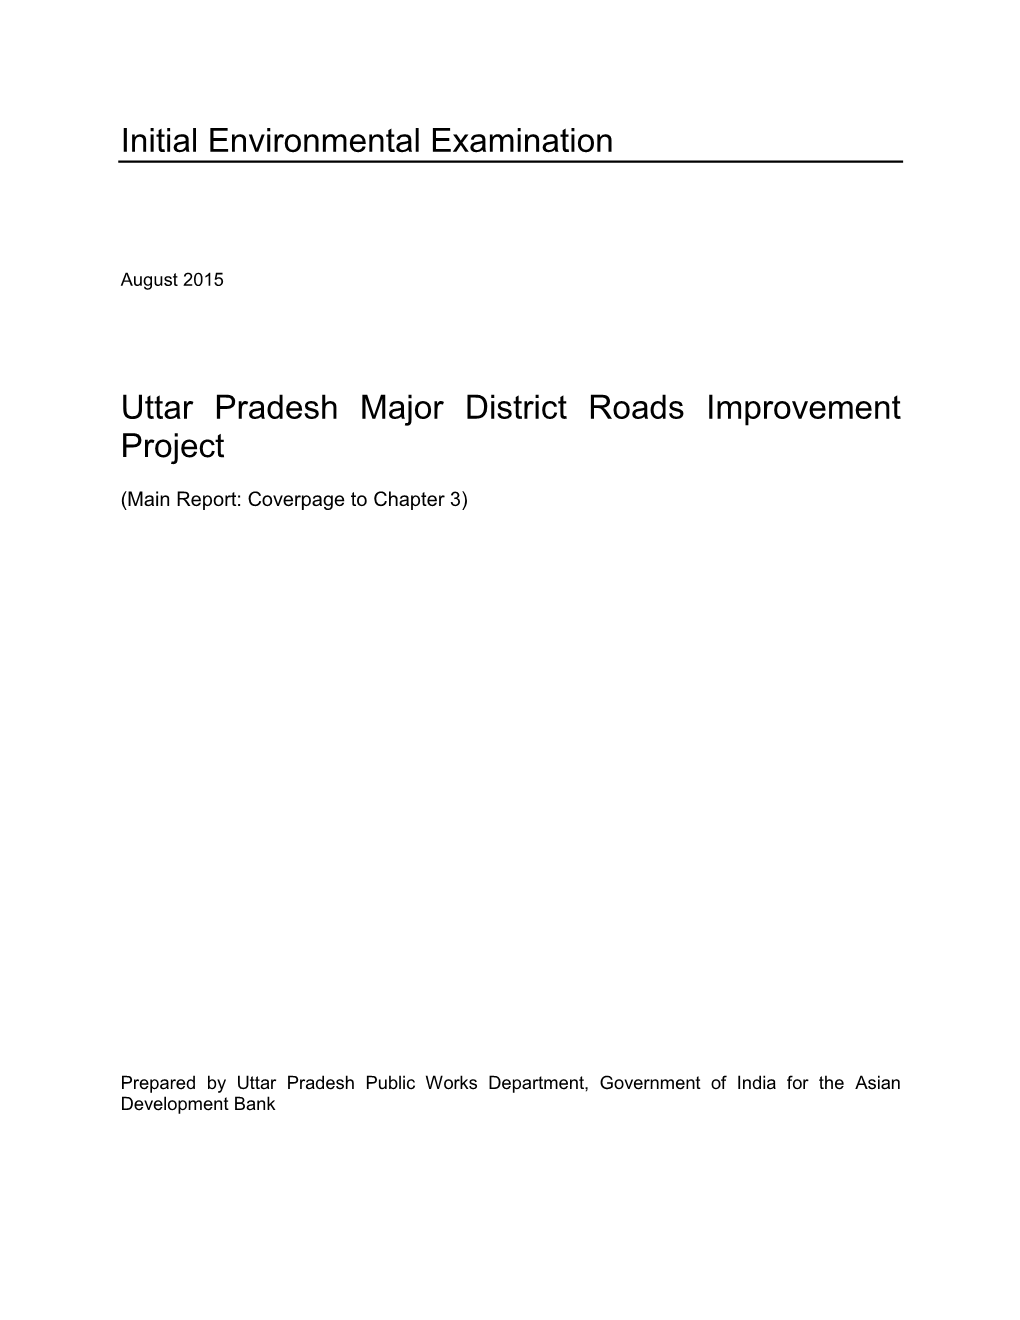 Uttar Pradesh Major District Roads Improvement Project